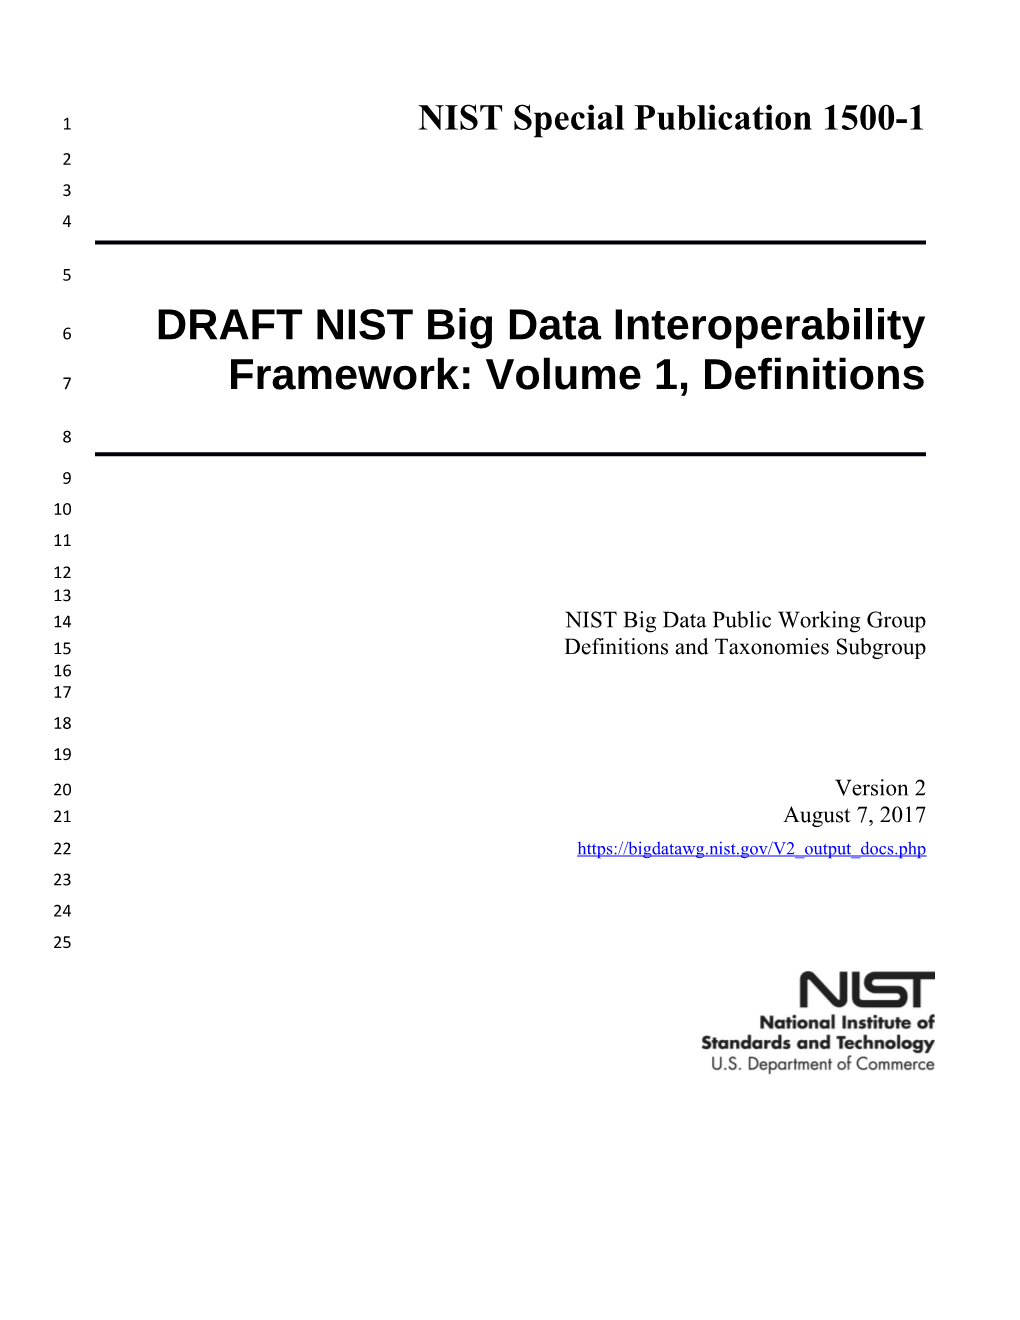 DRAFT NIST Big Data Interoperability Framework:Volume 1, Definitions